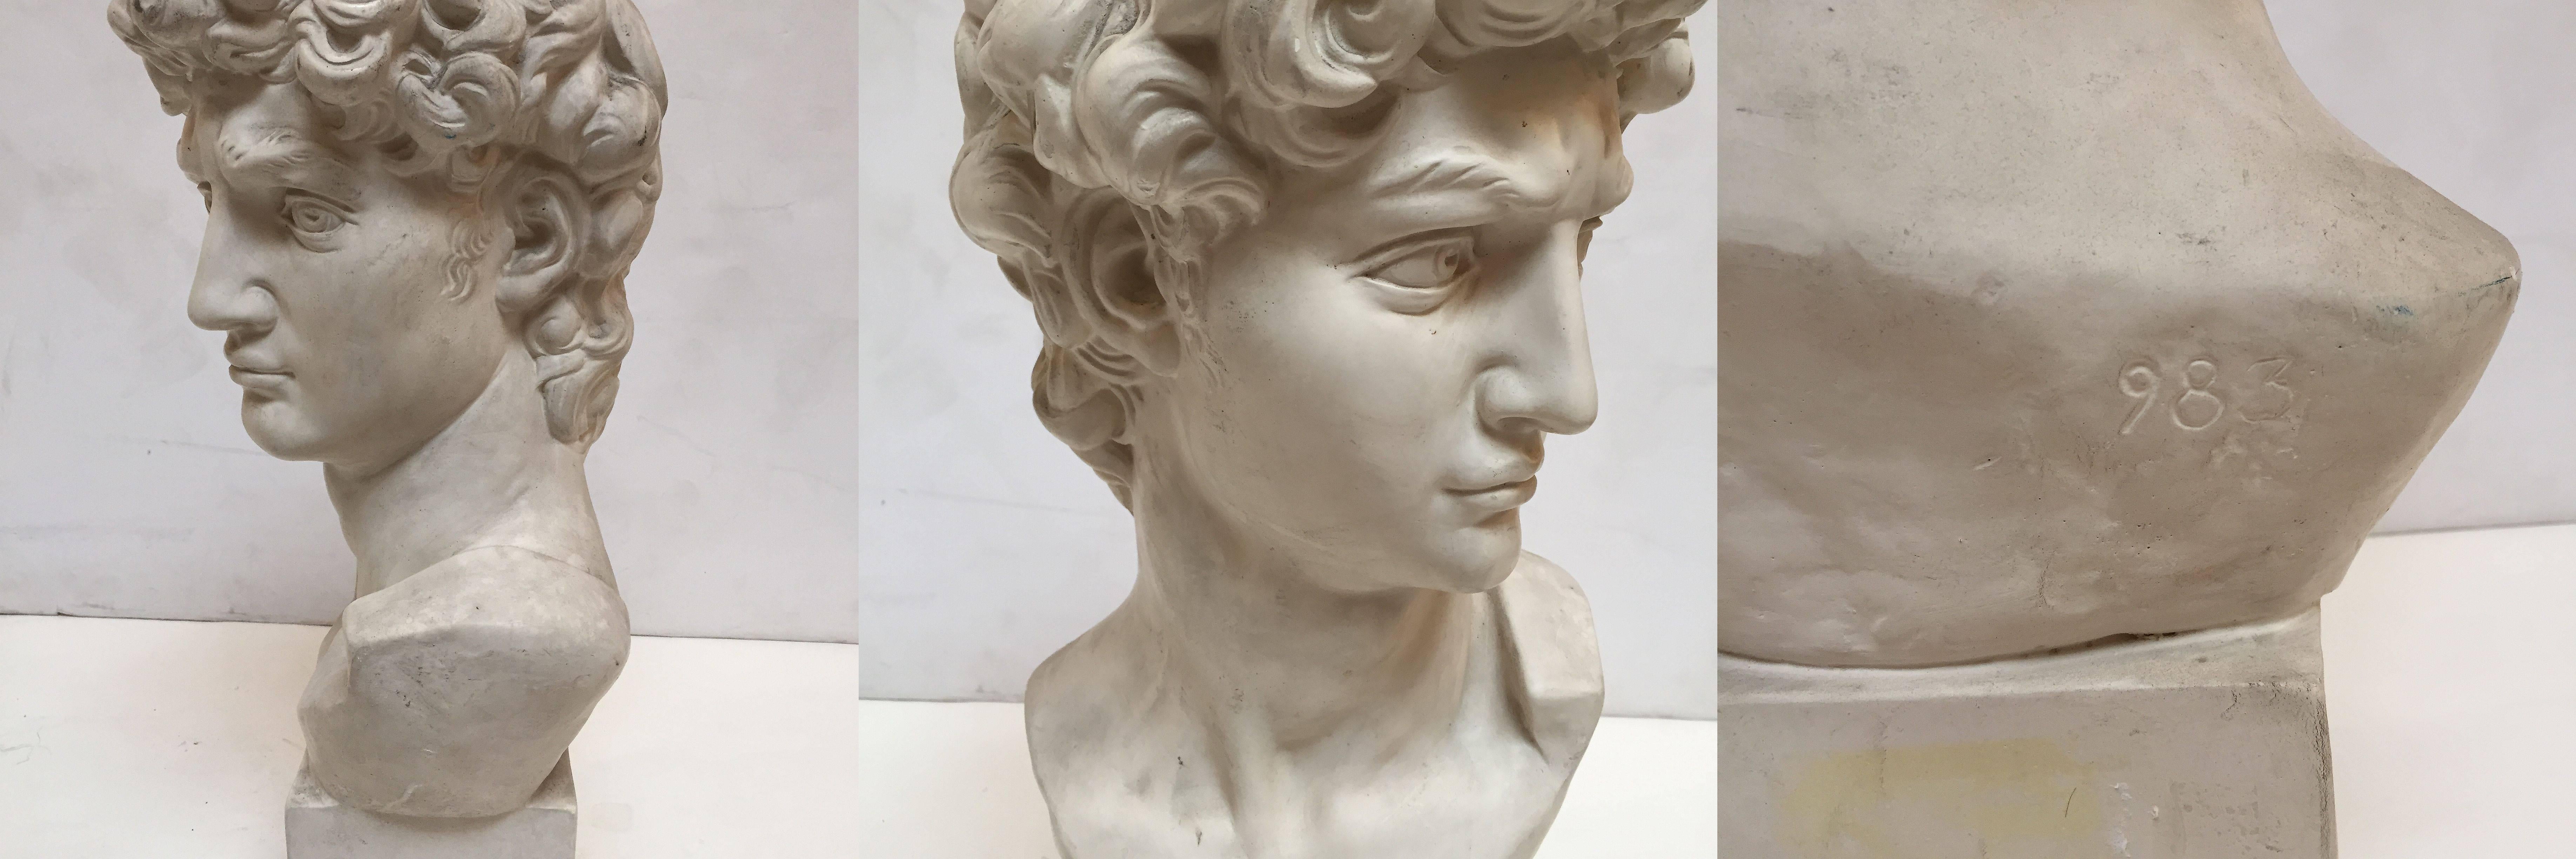 English Plaster Bust of Michelangelo's David 2